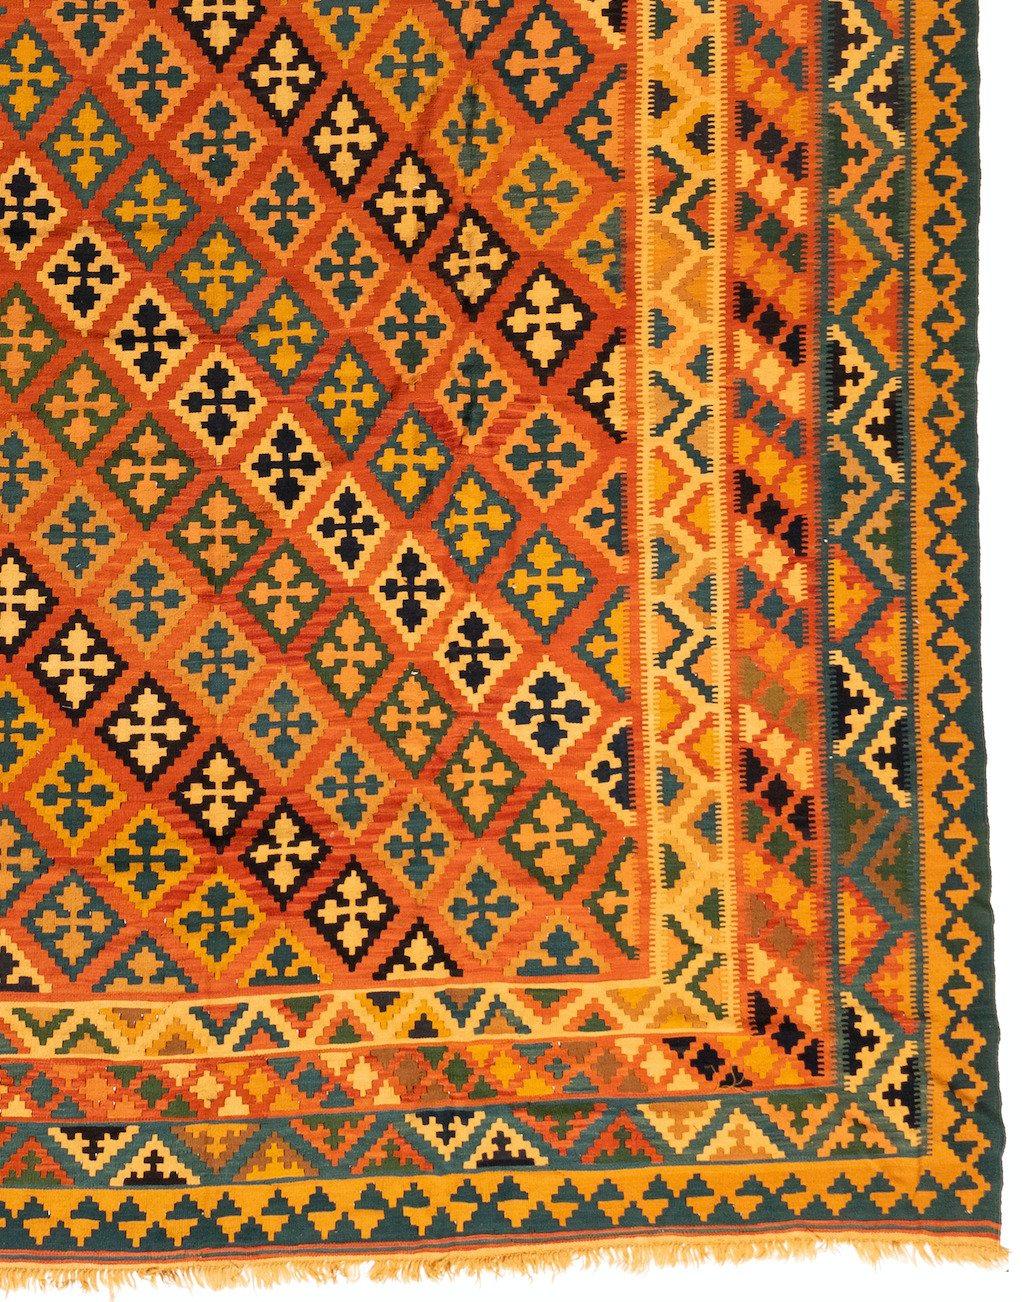 Hand-Woven Antique Orange and Yellow Caucasian Kilim Geometric Rug, circa 1940s For Sale